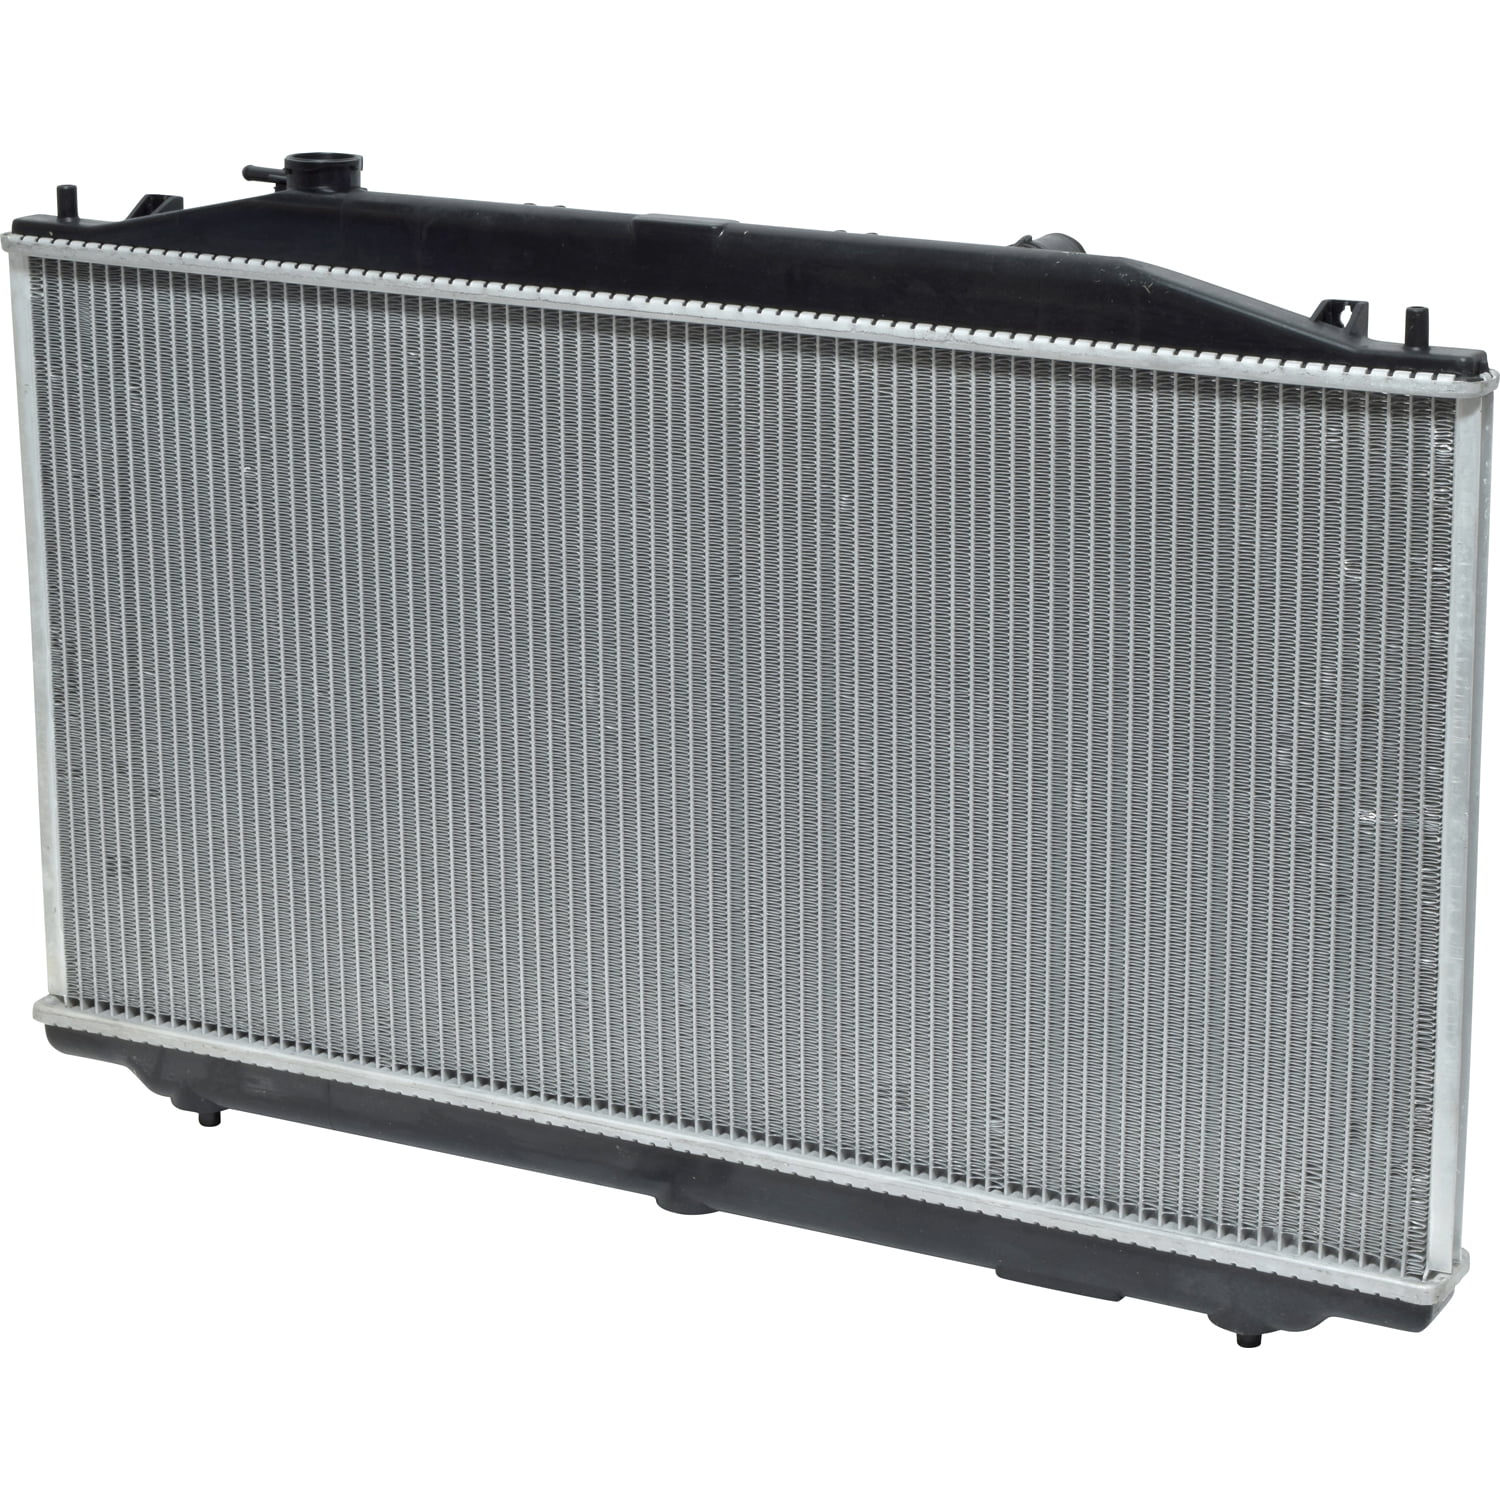 Radiator AC Condenser RIGHT Side Fan Assembly For V6 Crosstour 10 11 12 13 14 15